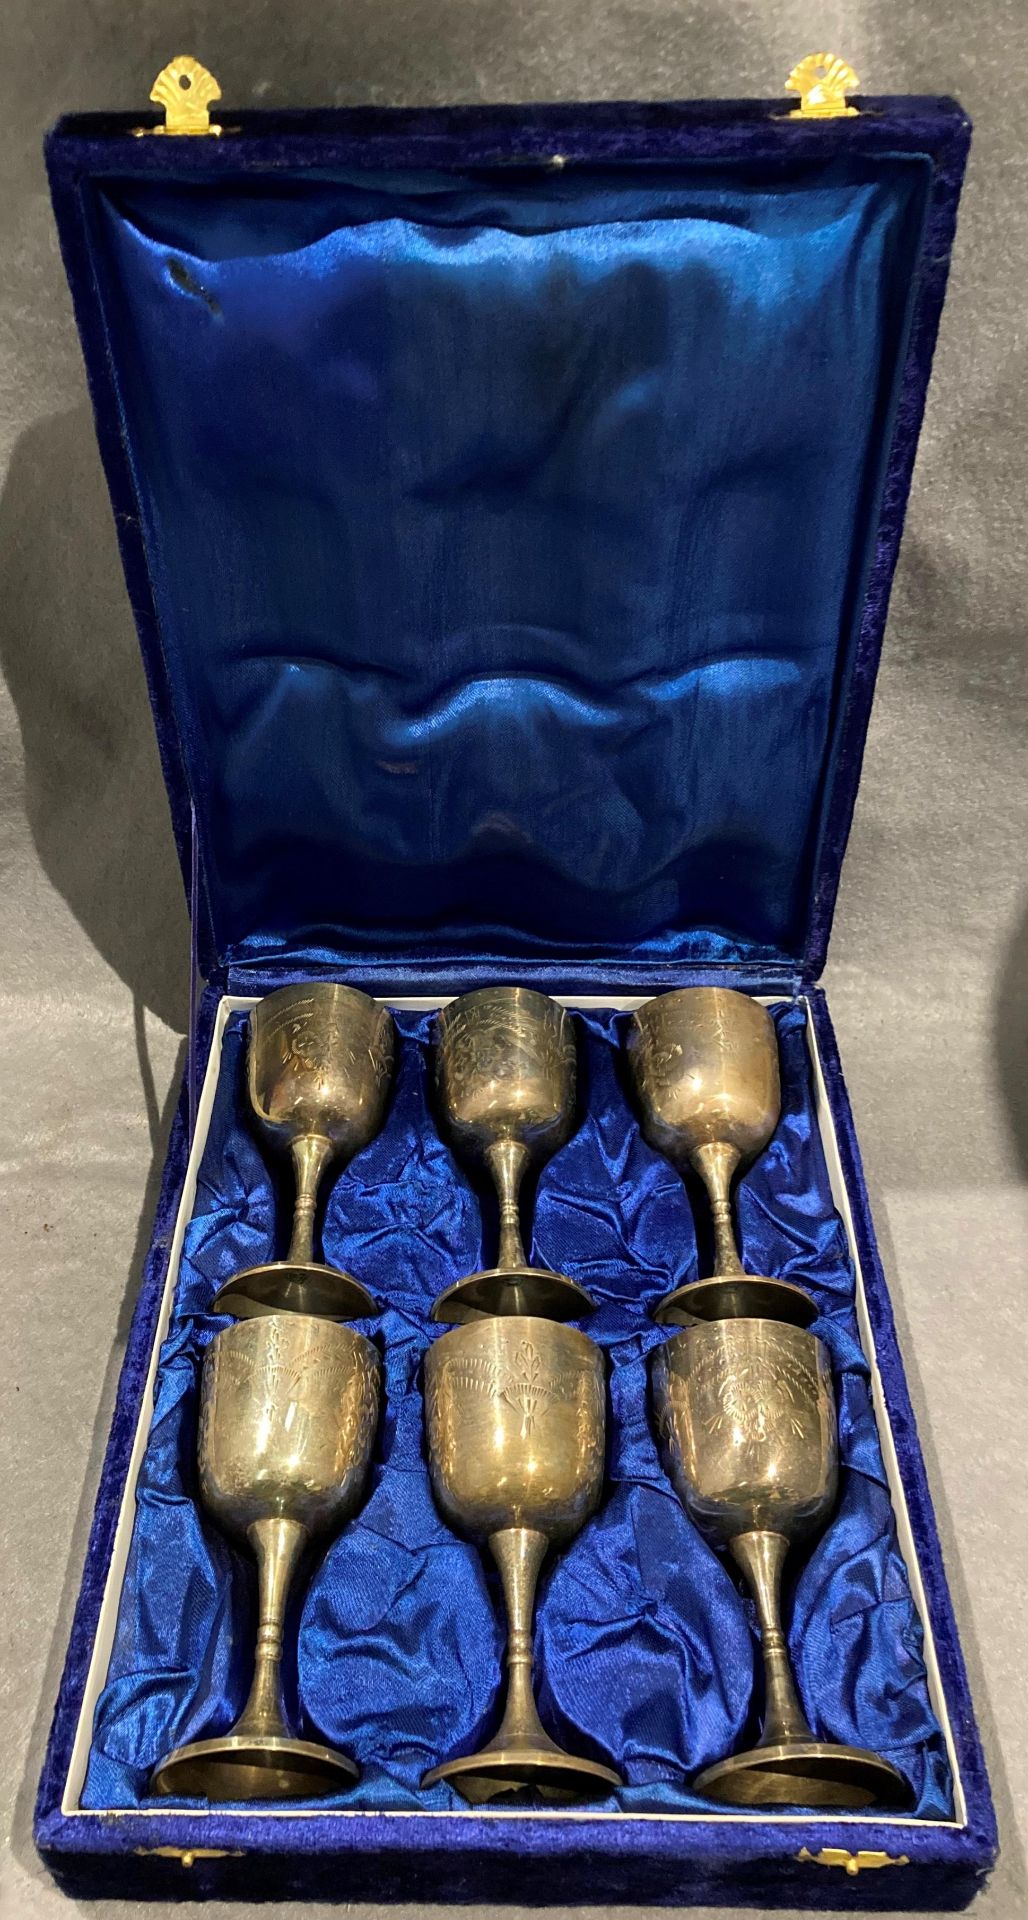 A set of six engraved plated goblets in blue velvet finish case